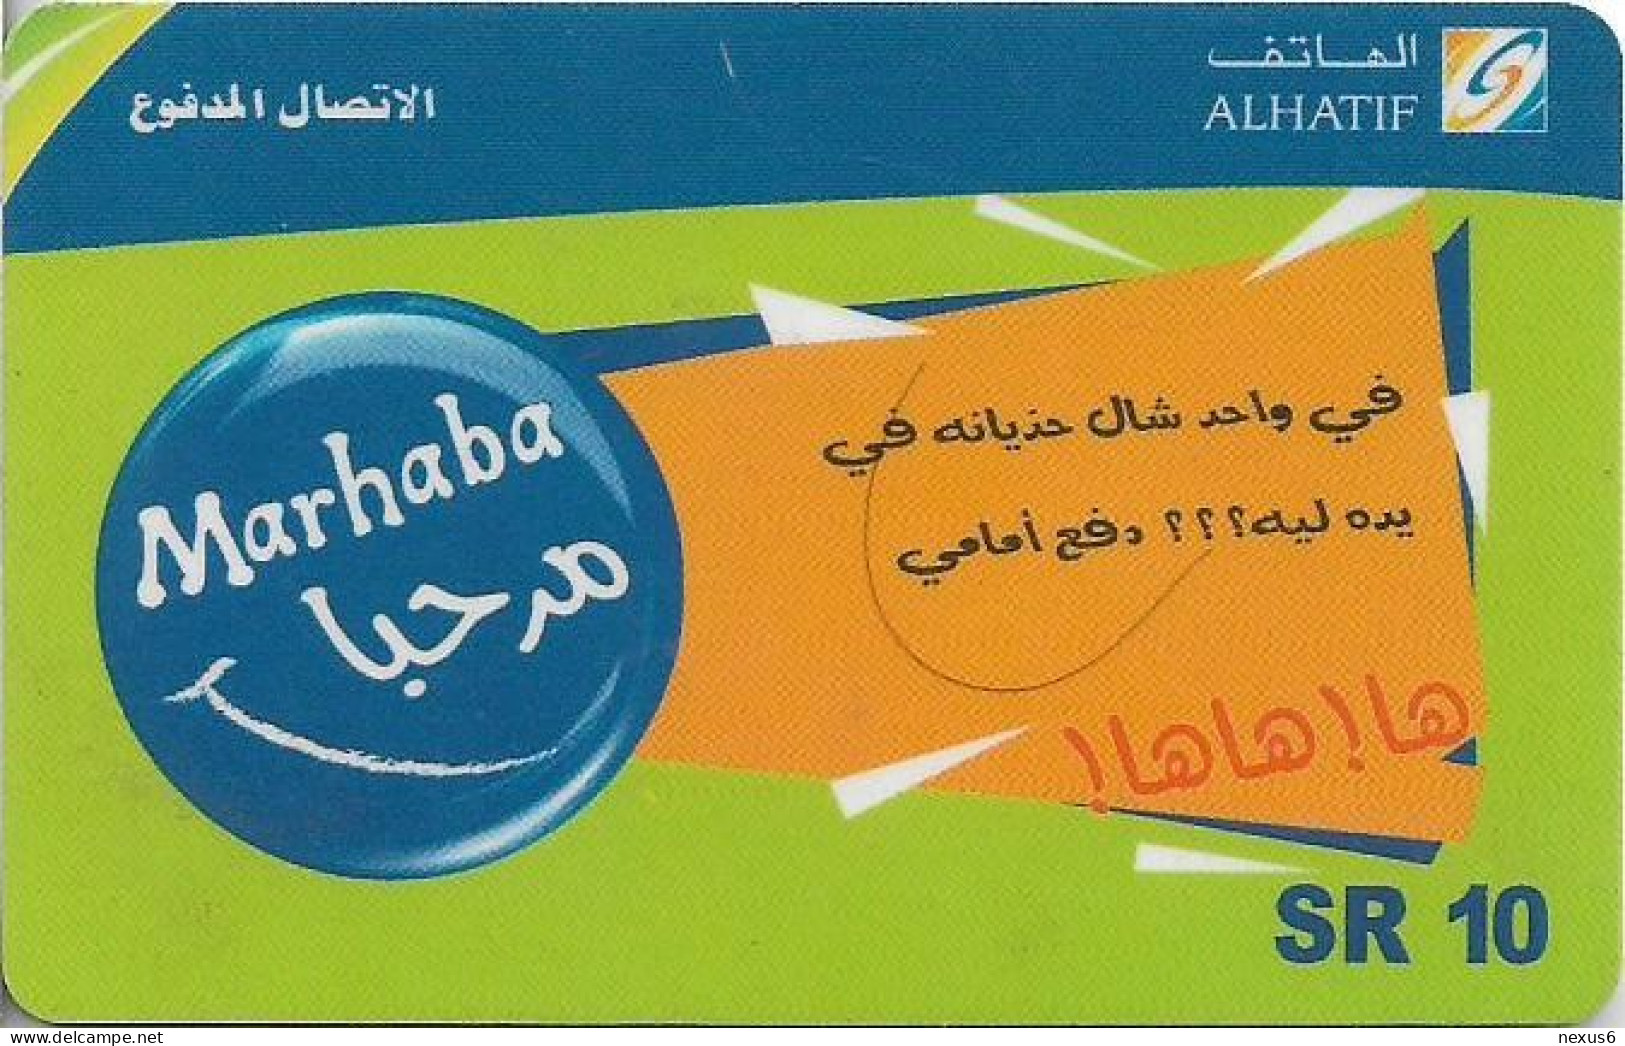 Saudi Arabia - S.T.C - Alhatif, Marhaba, 06.2003, Remote Mem. 10SR, Used - Saoedi-Arabië